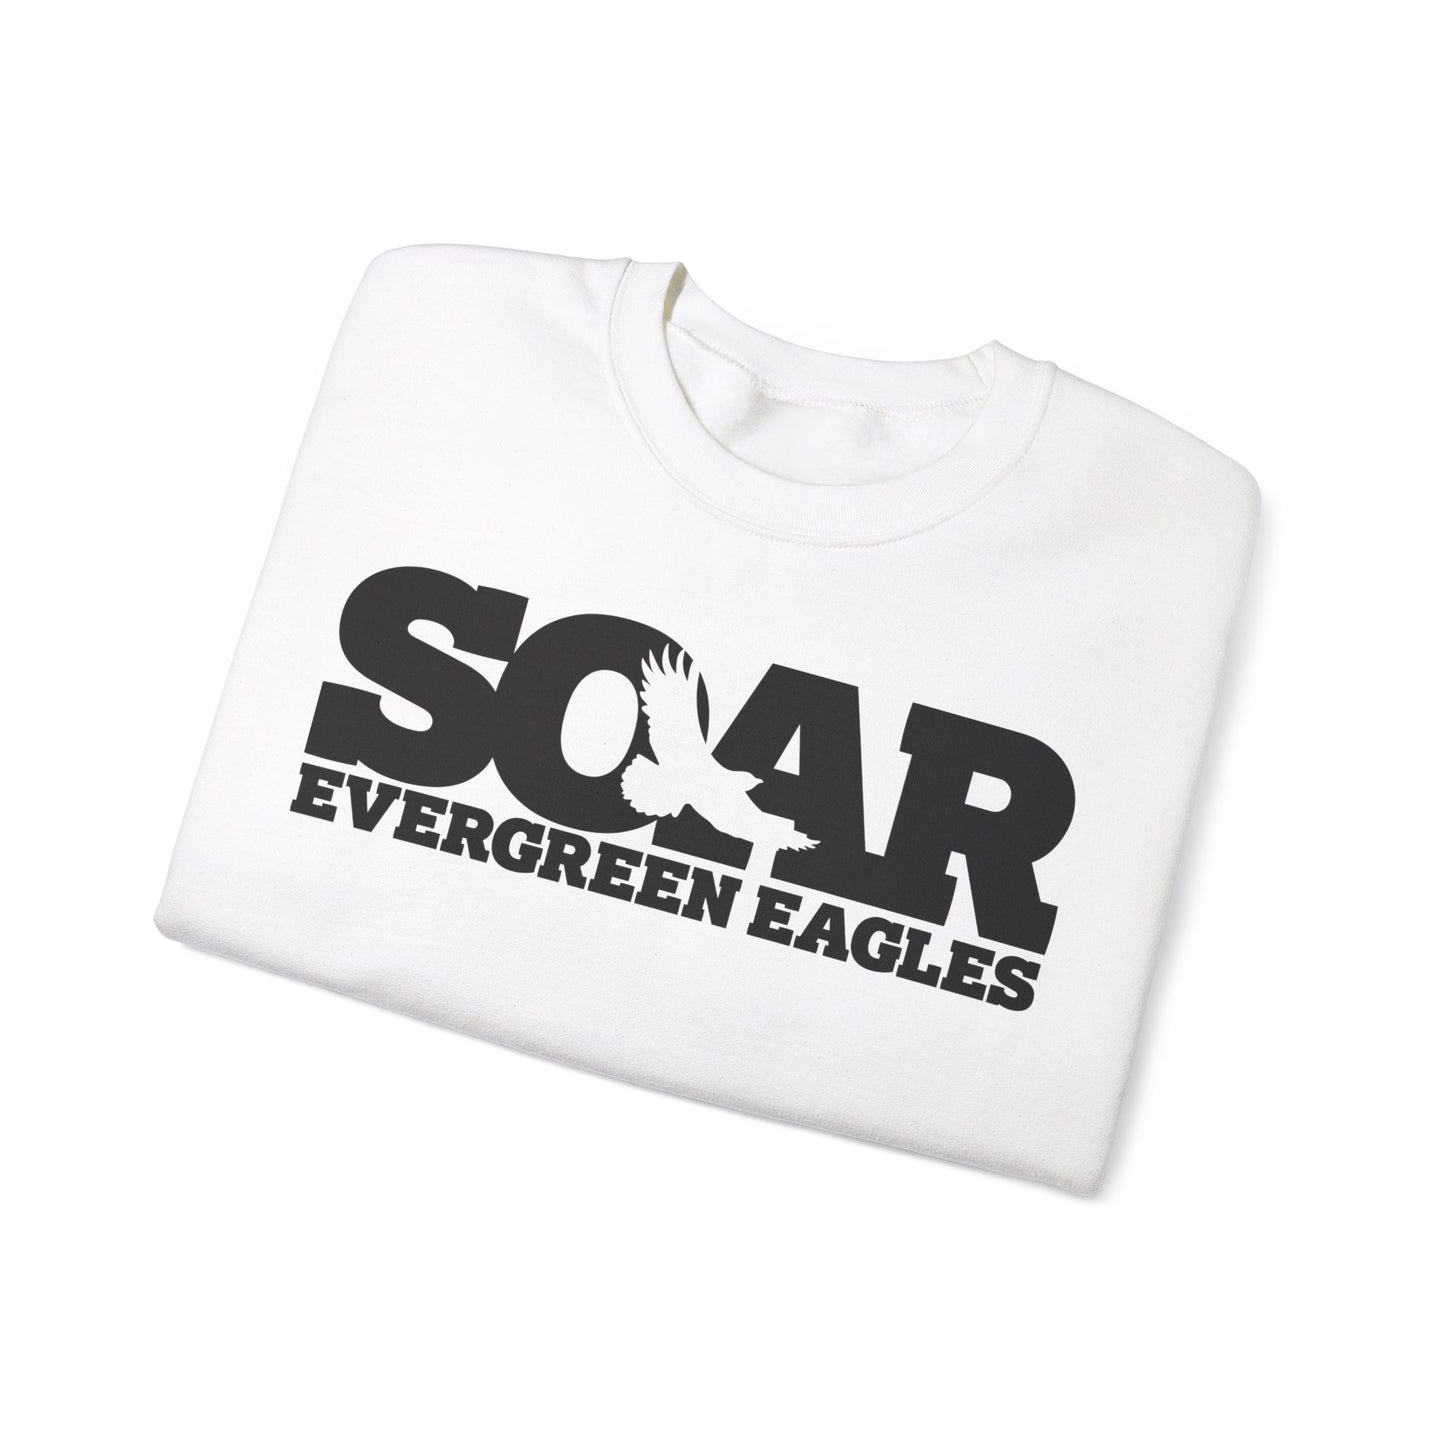 SOAR Evergreen Elementary Crewneck - Adult